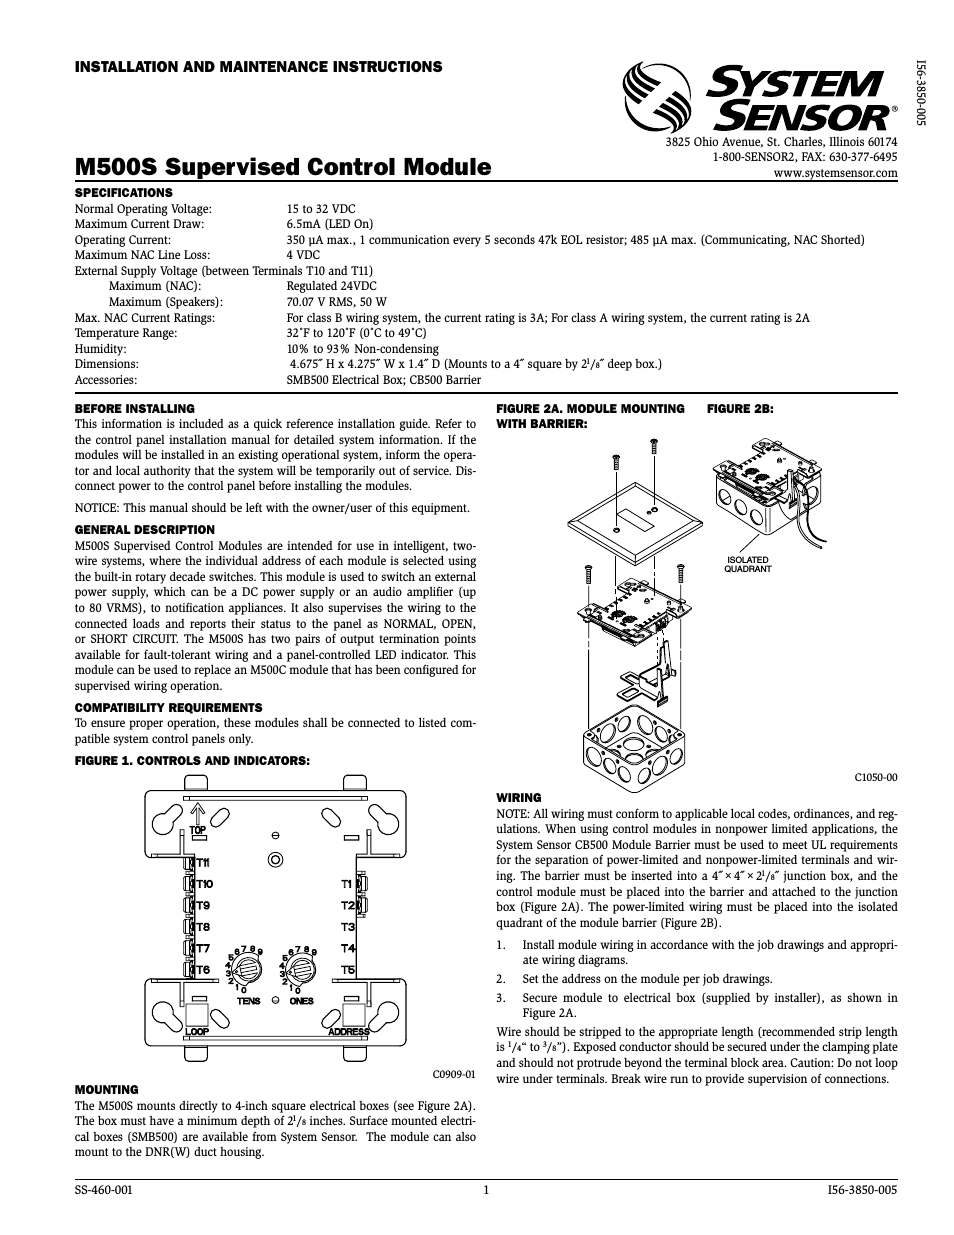 Supervised Control Module M500S